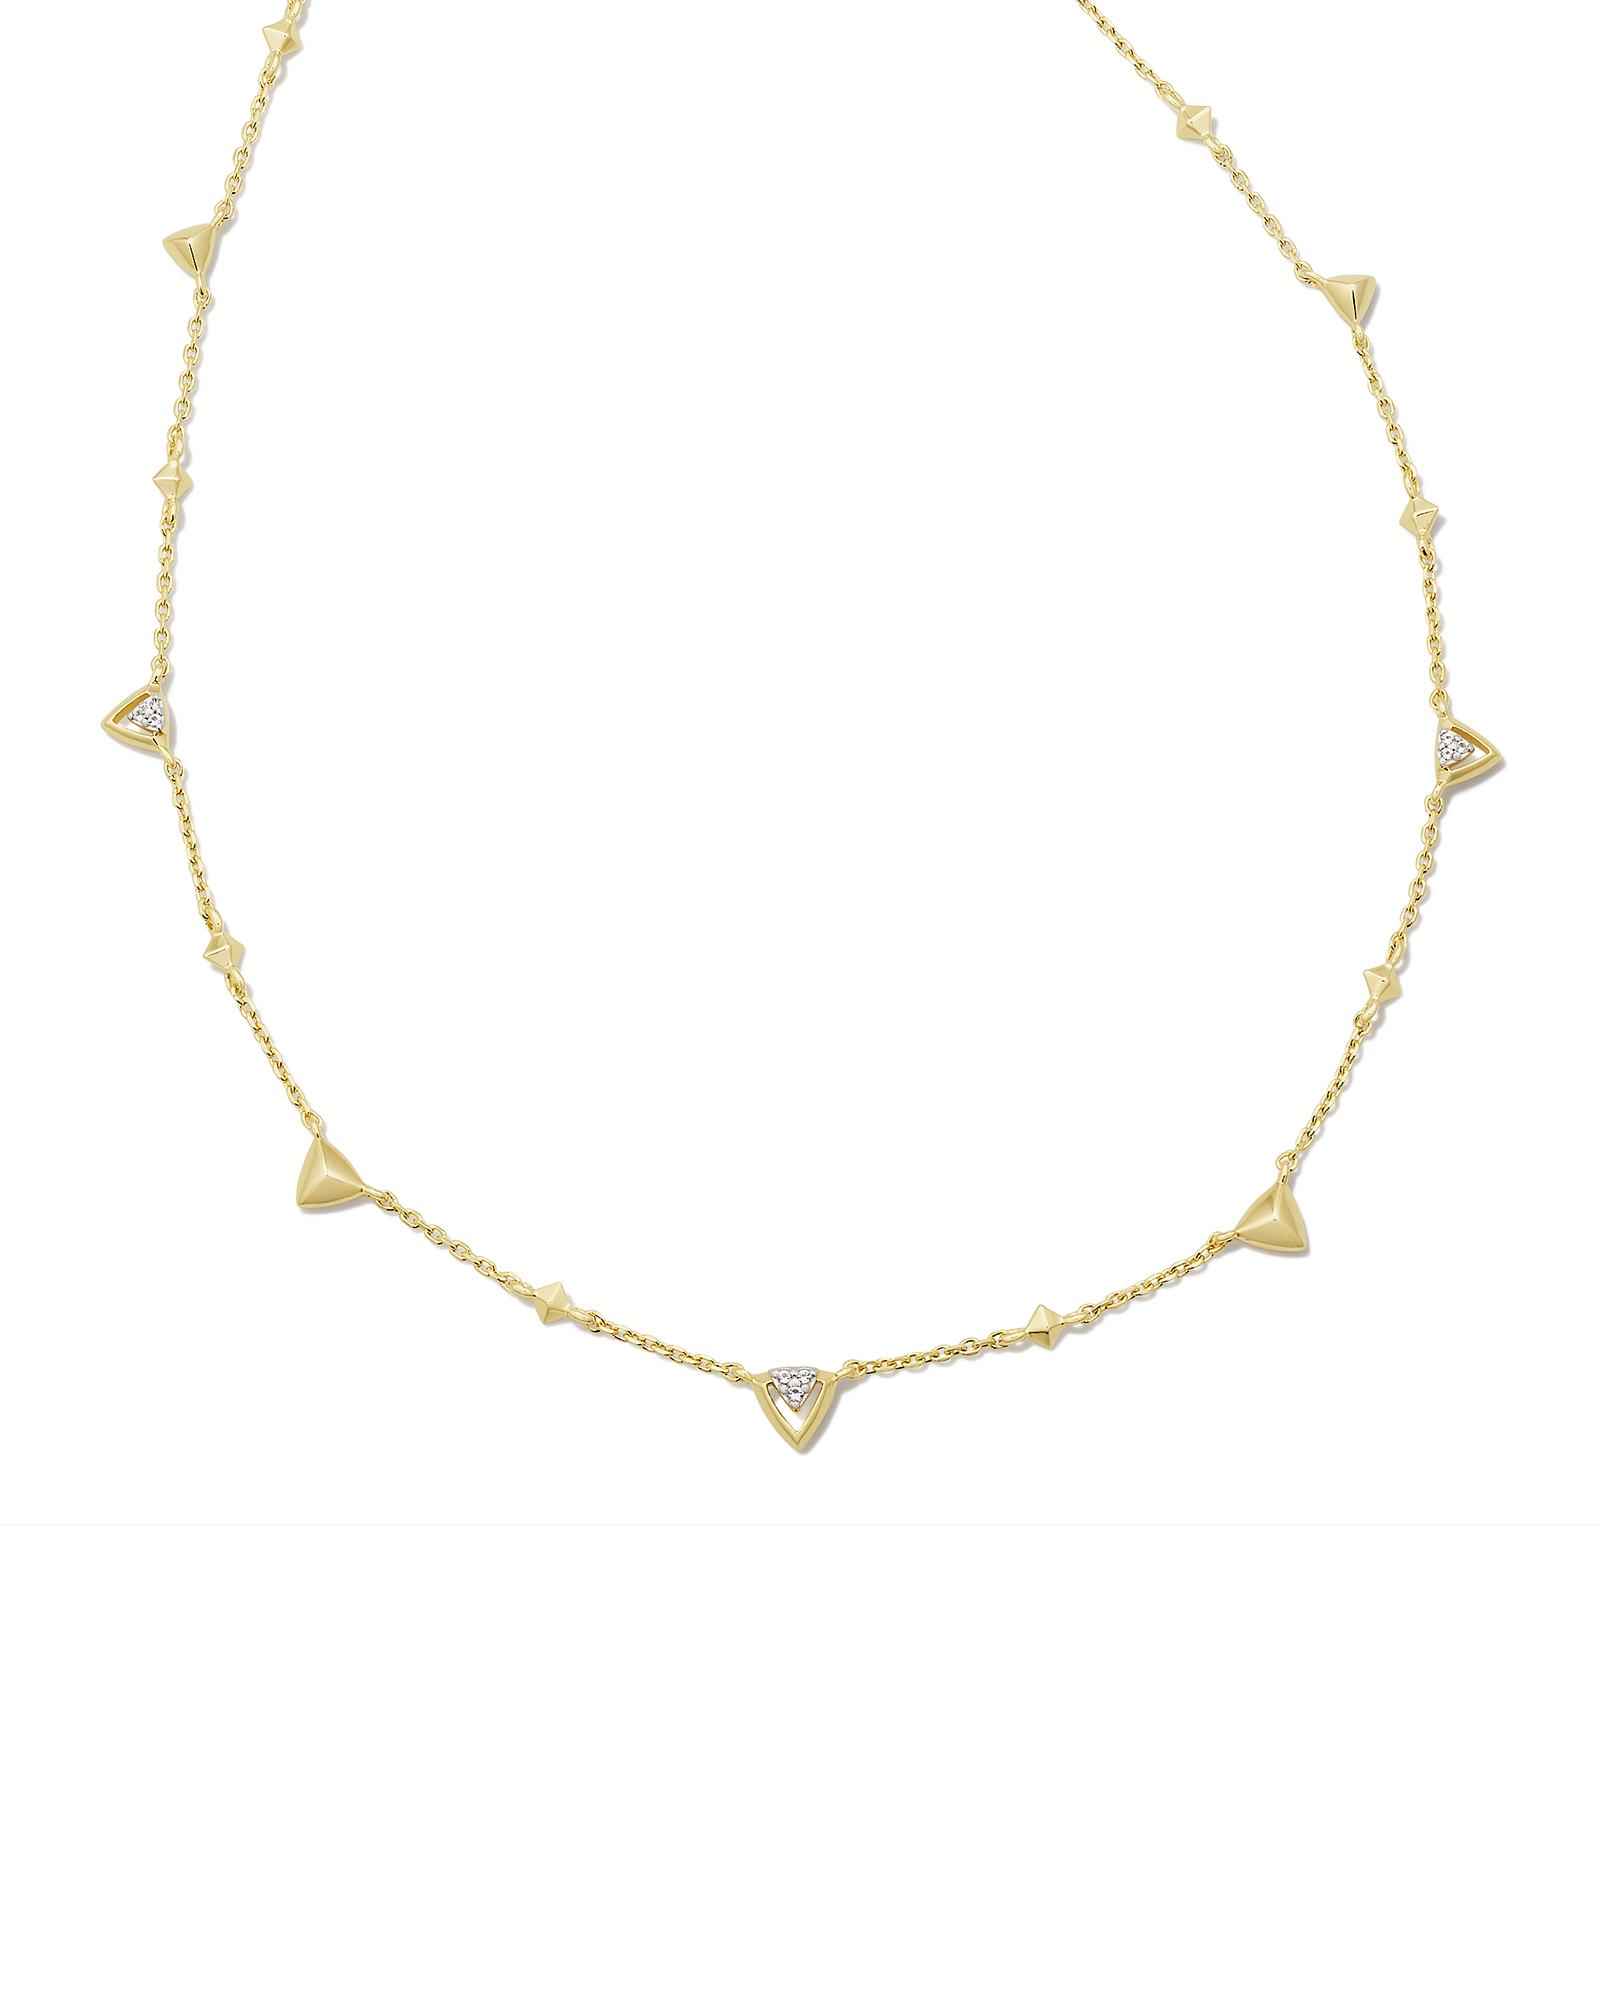 Spencer 18k Gold Vermeil Strand Necklace in White Topaz